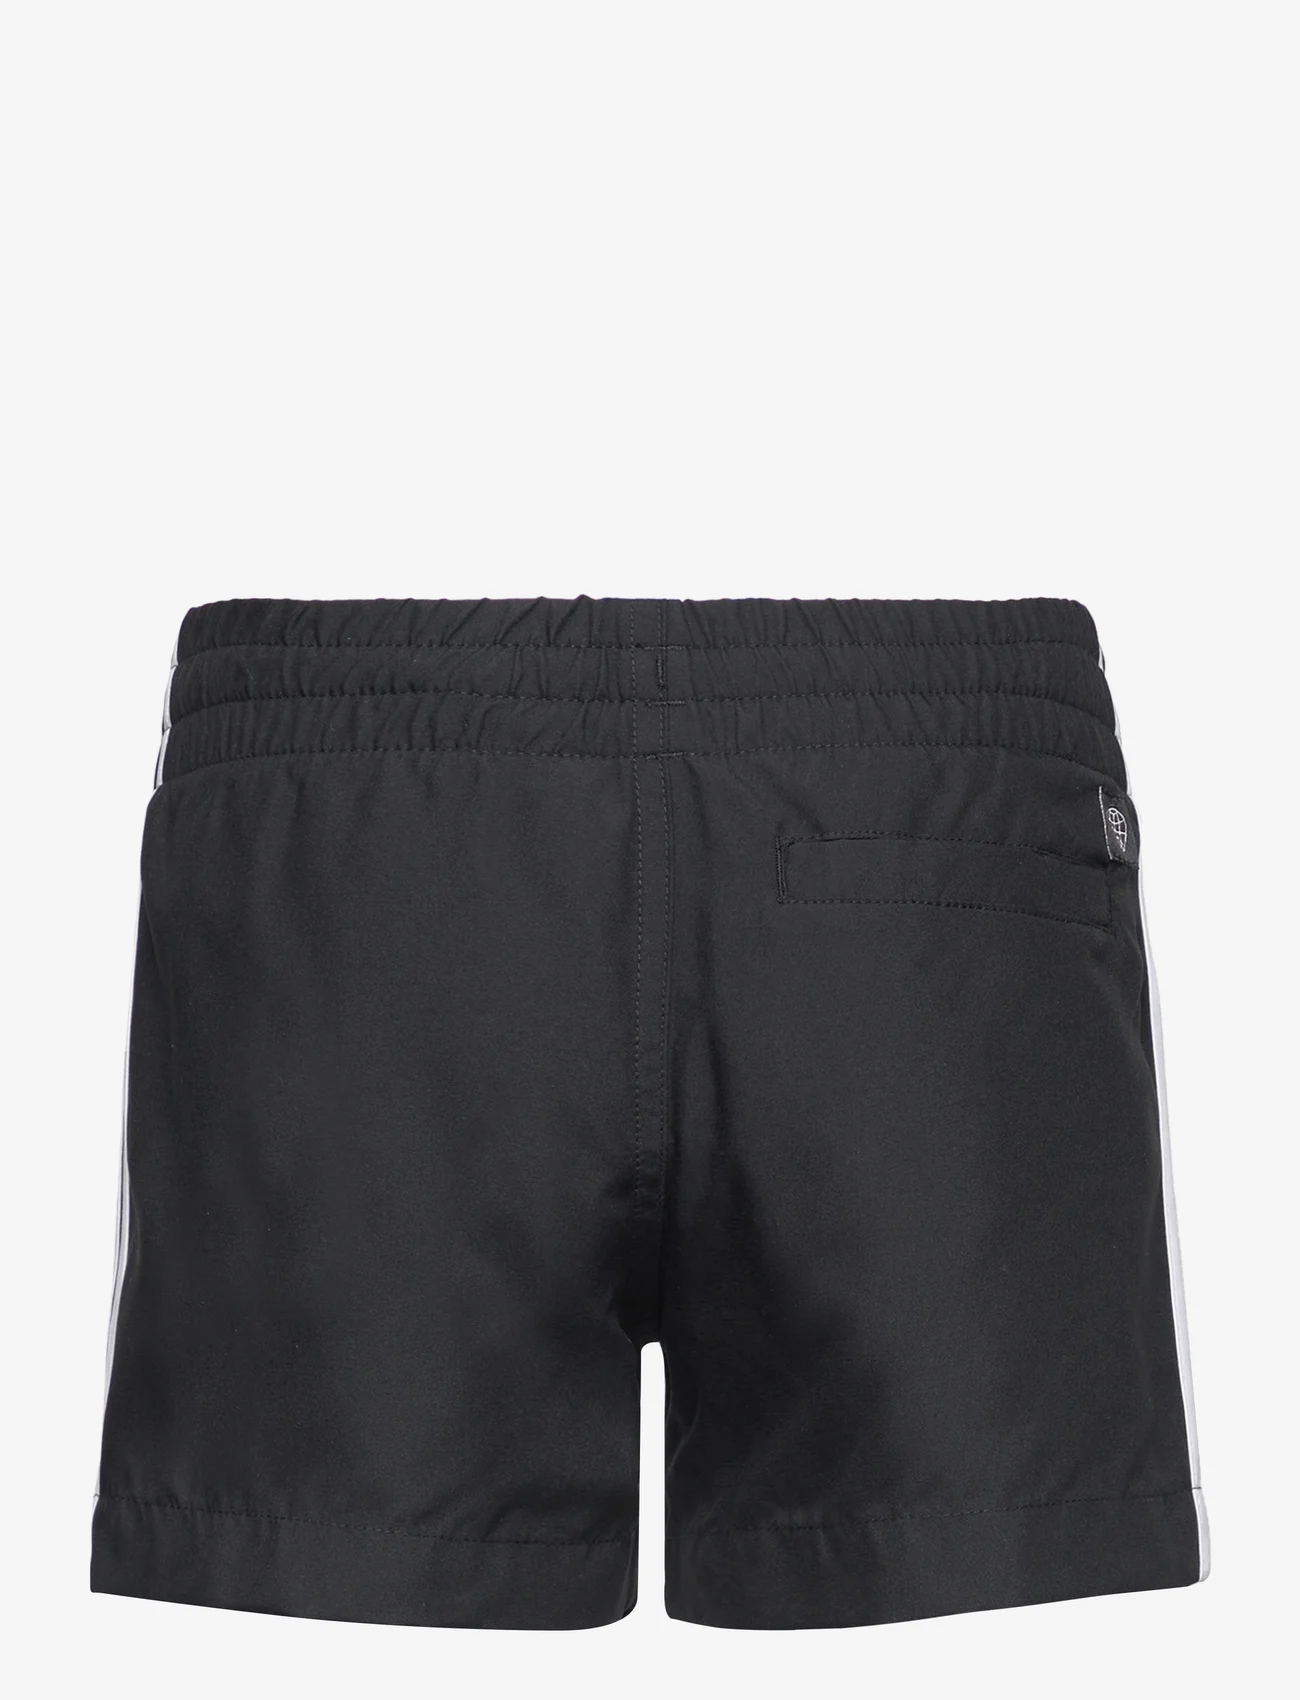 adidas Performance - ORI 3S SHO - swim shorts - black/white - 1